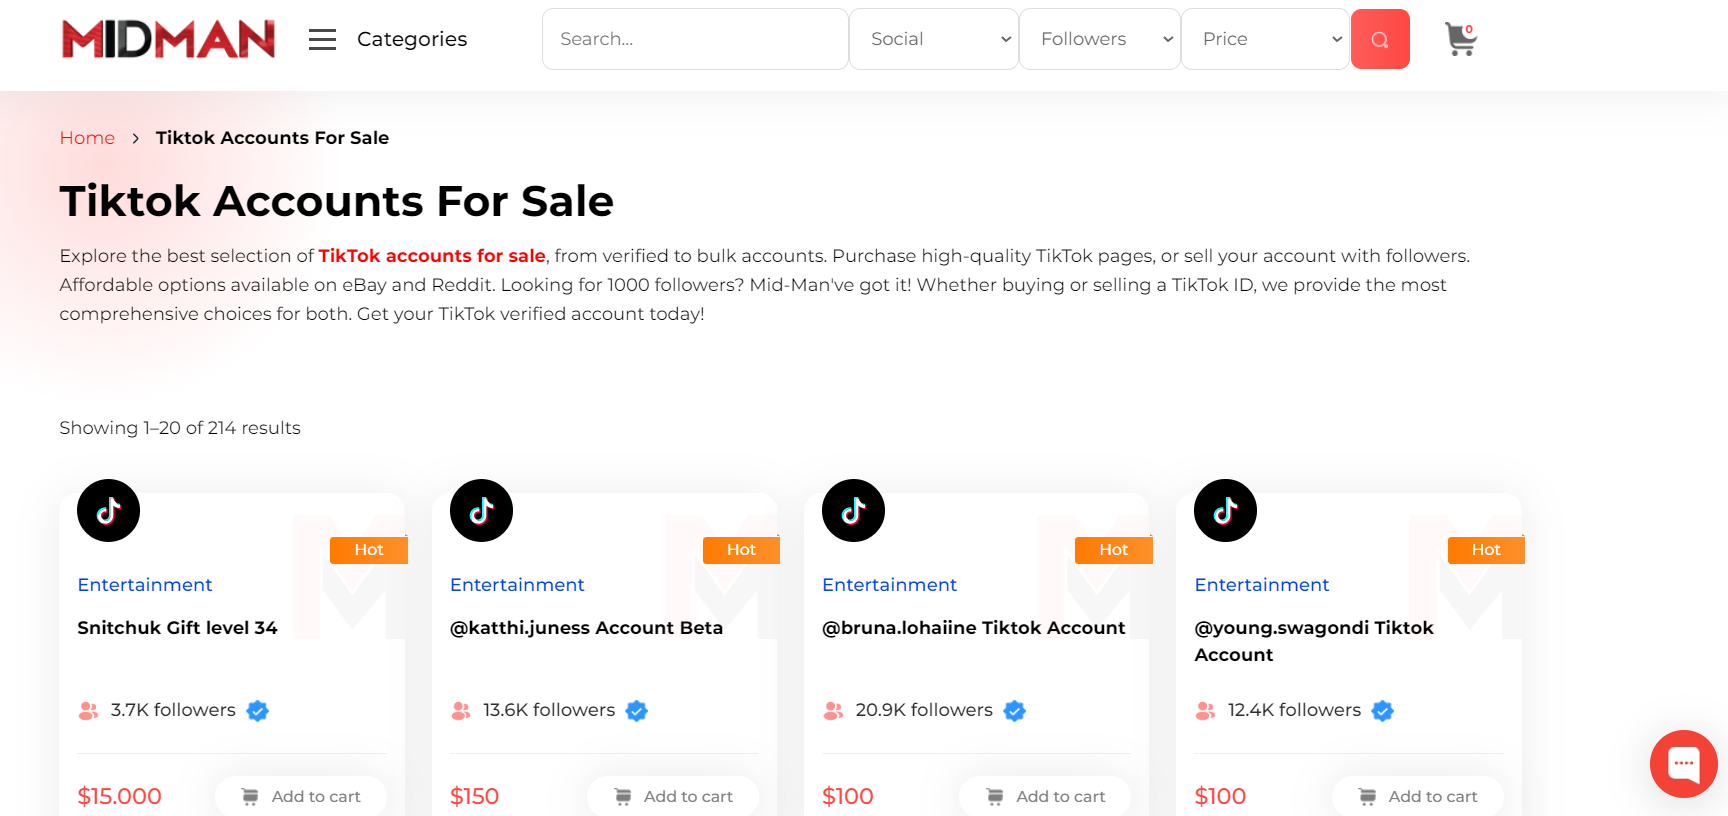 180K Verified TikTok Account for Sale - SwapSocials